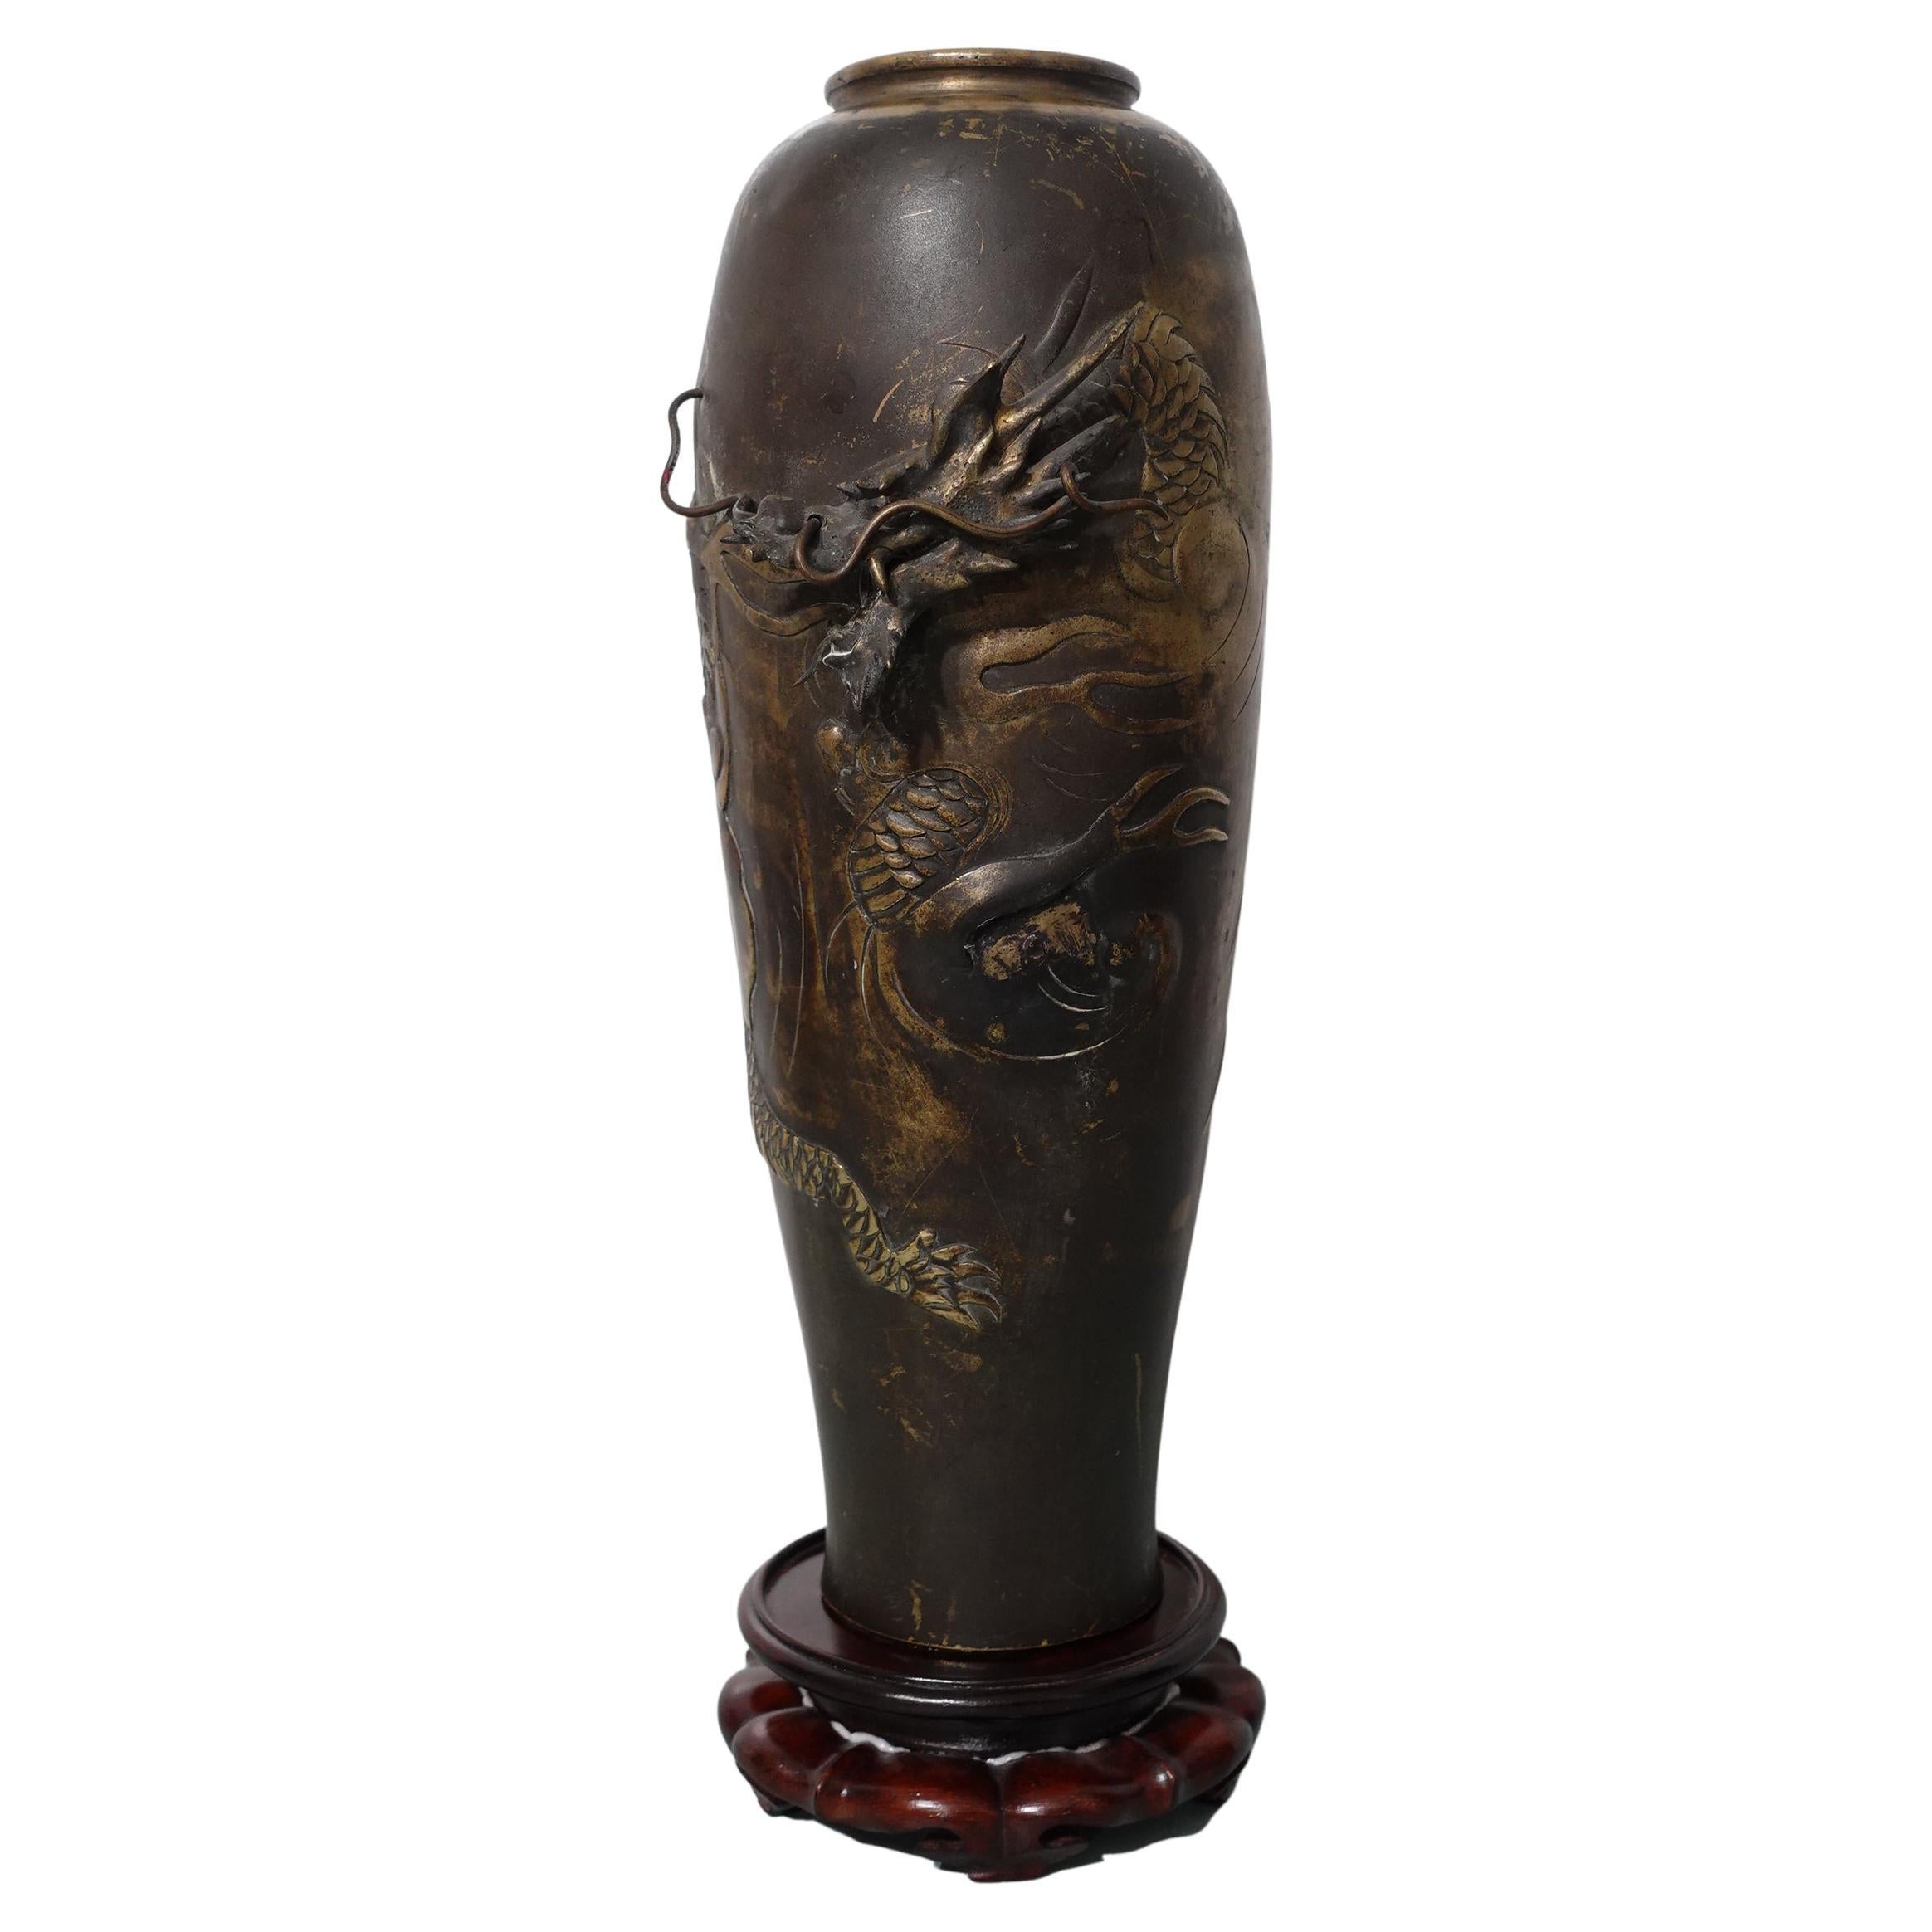 Antique Japanese Relief Sculptural Bronze Dragon Vase with Hardwood Stand